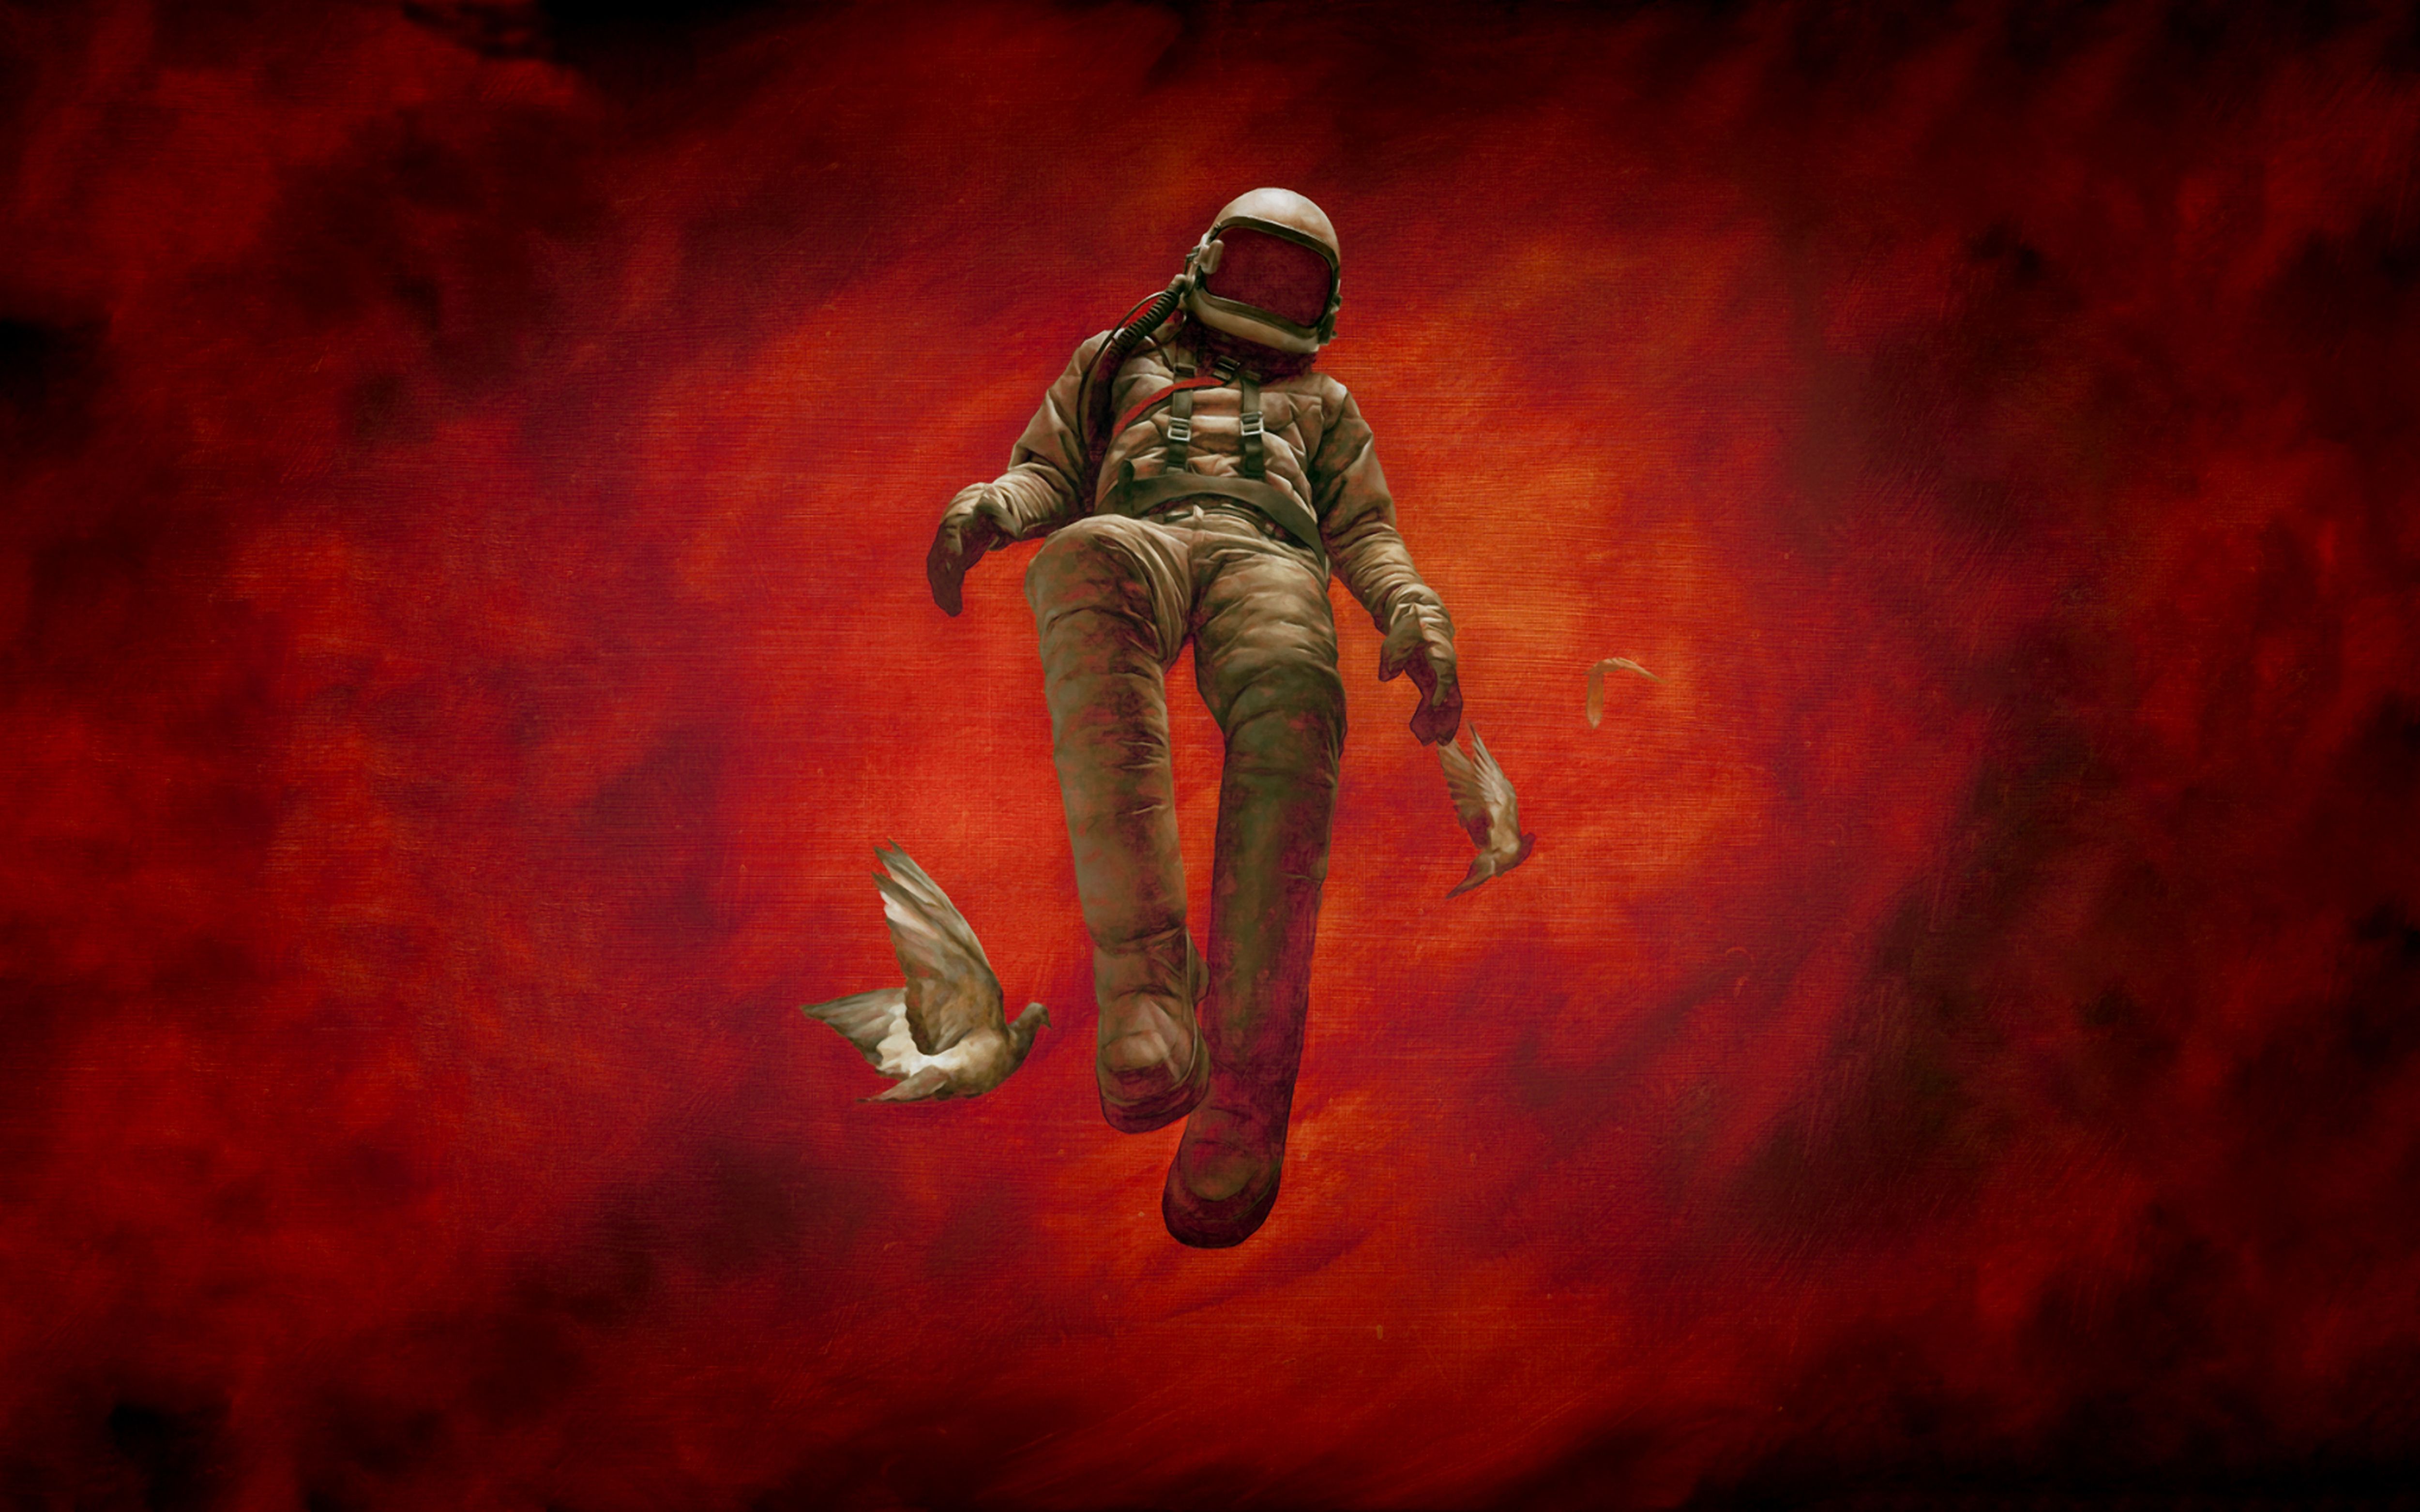 Космонавт на Красном фоне